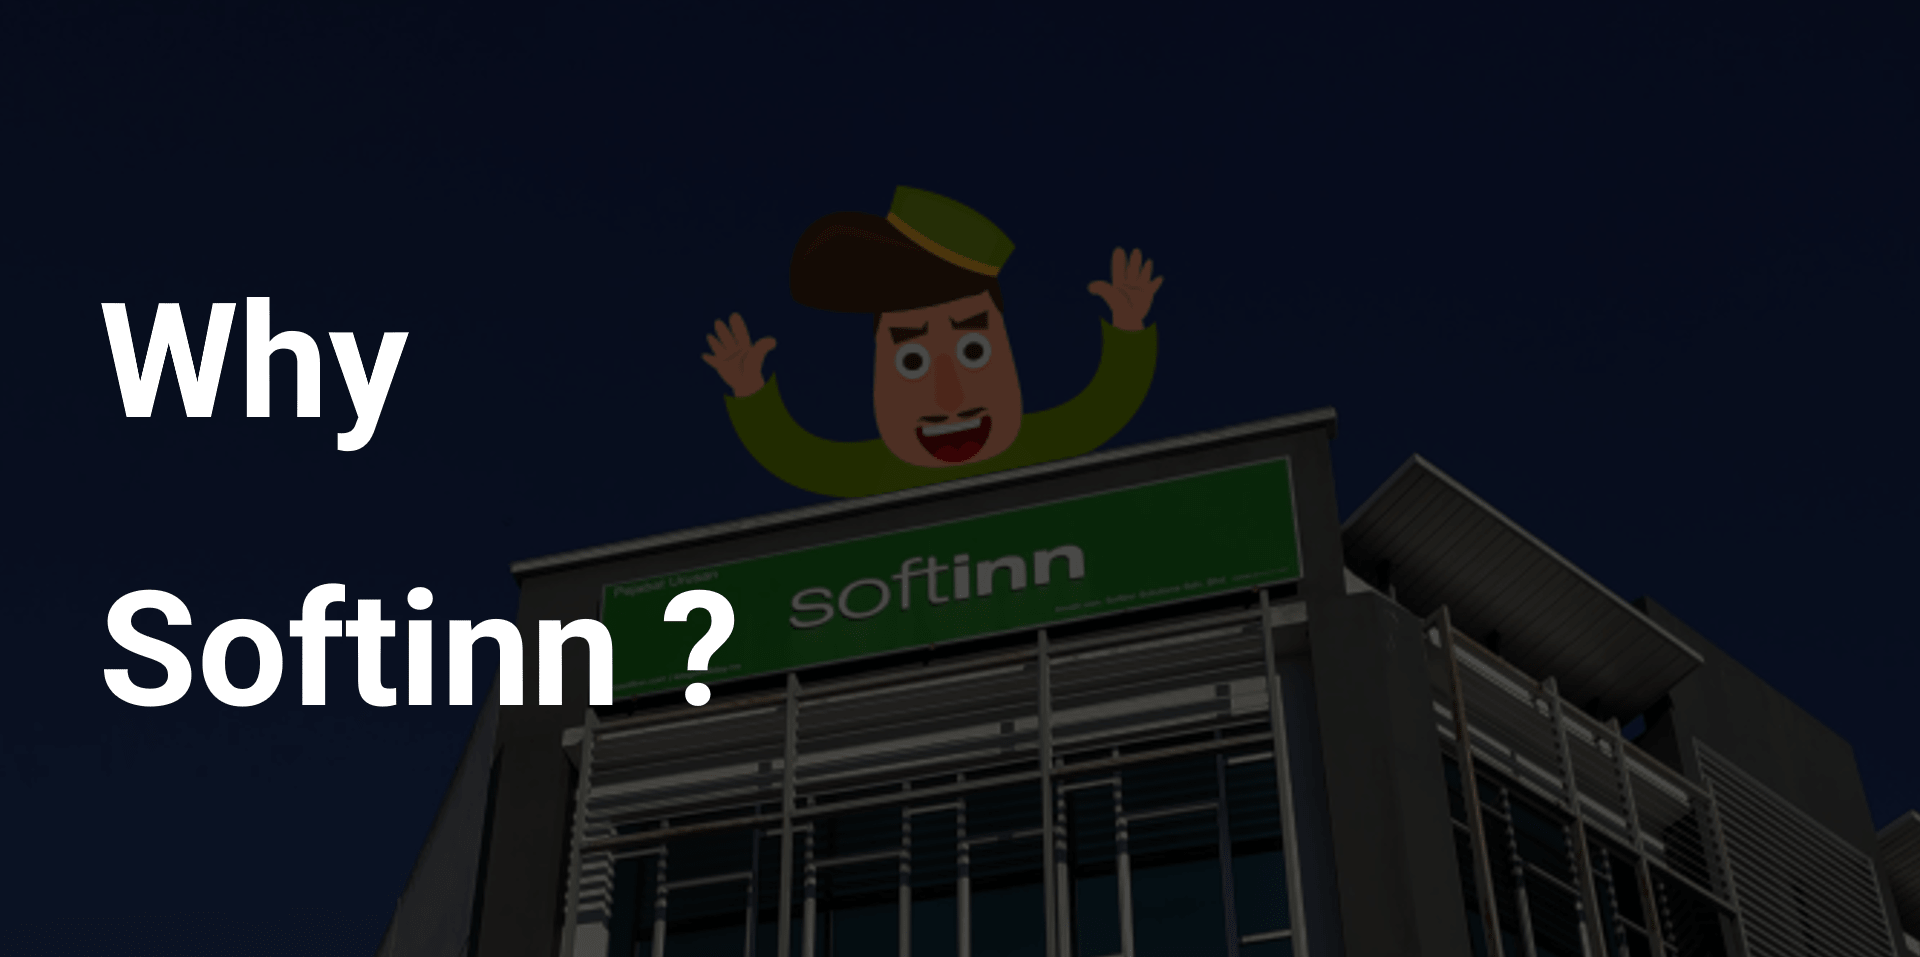 Why Softinn?